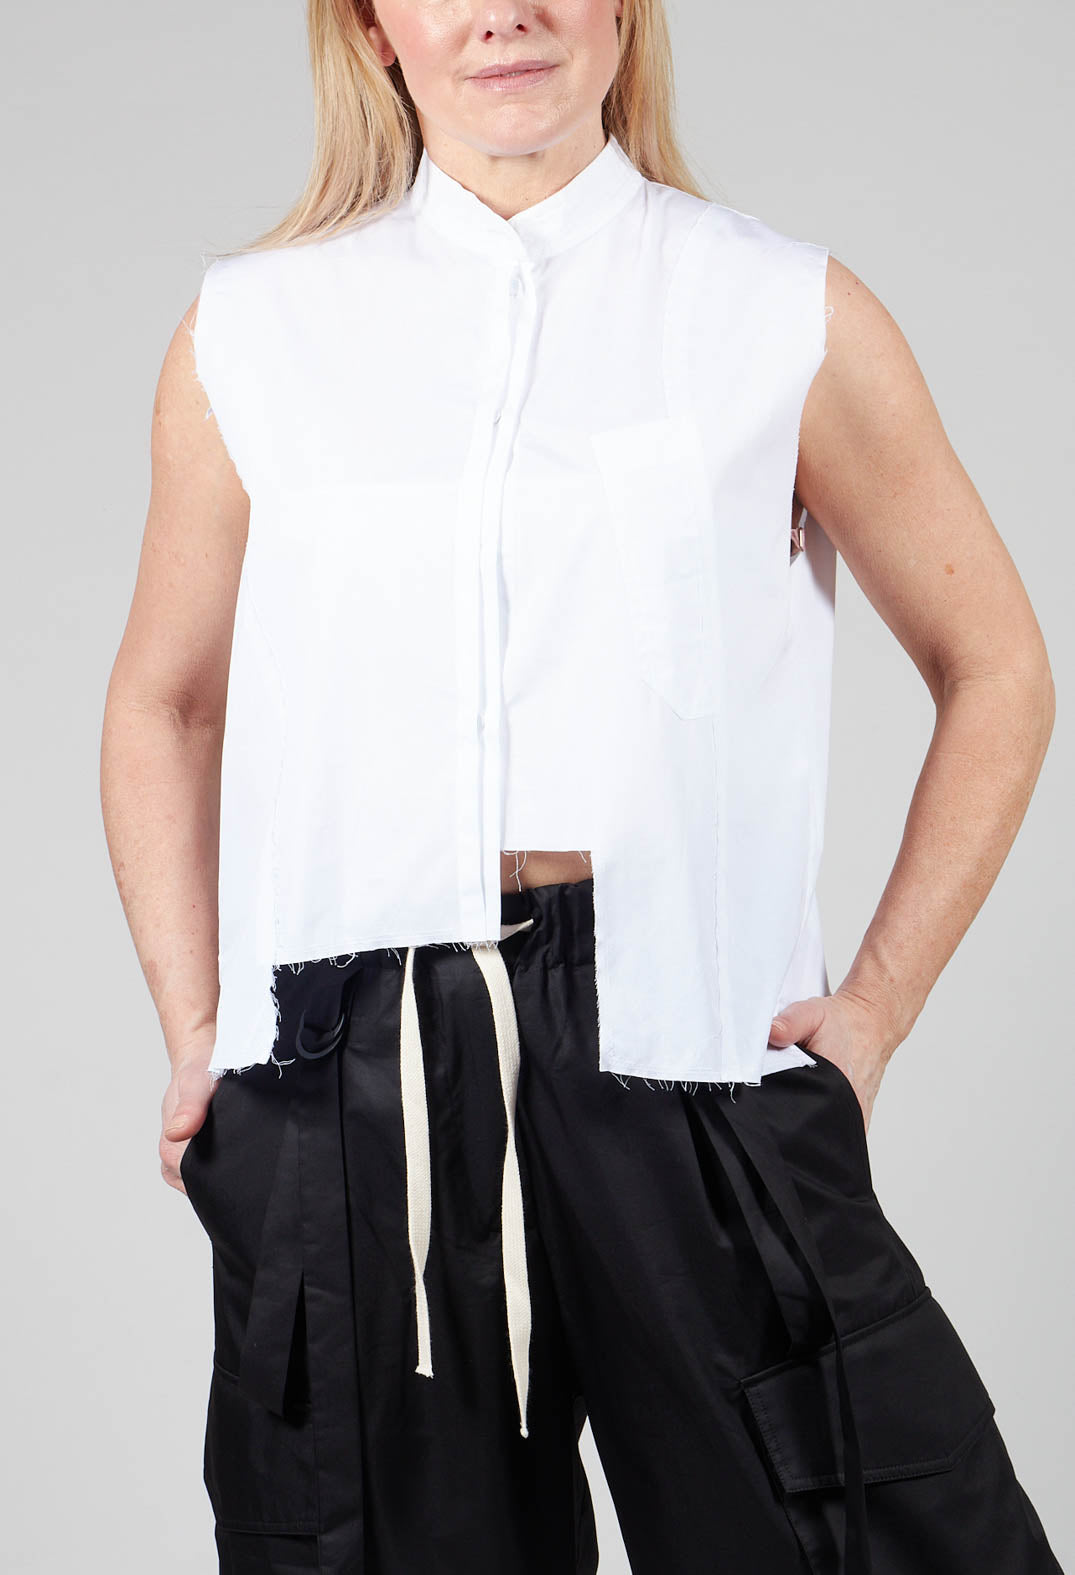 High Collar Sleeveless Shirt in White